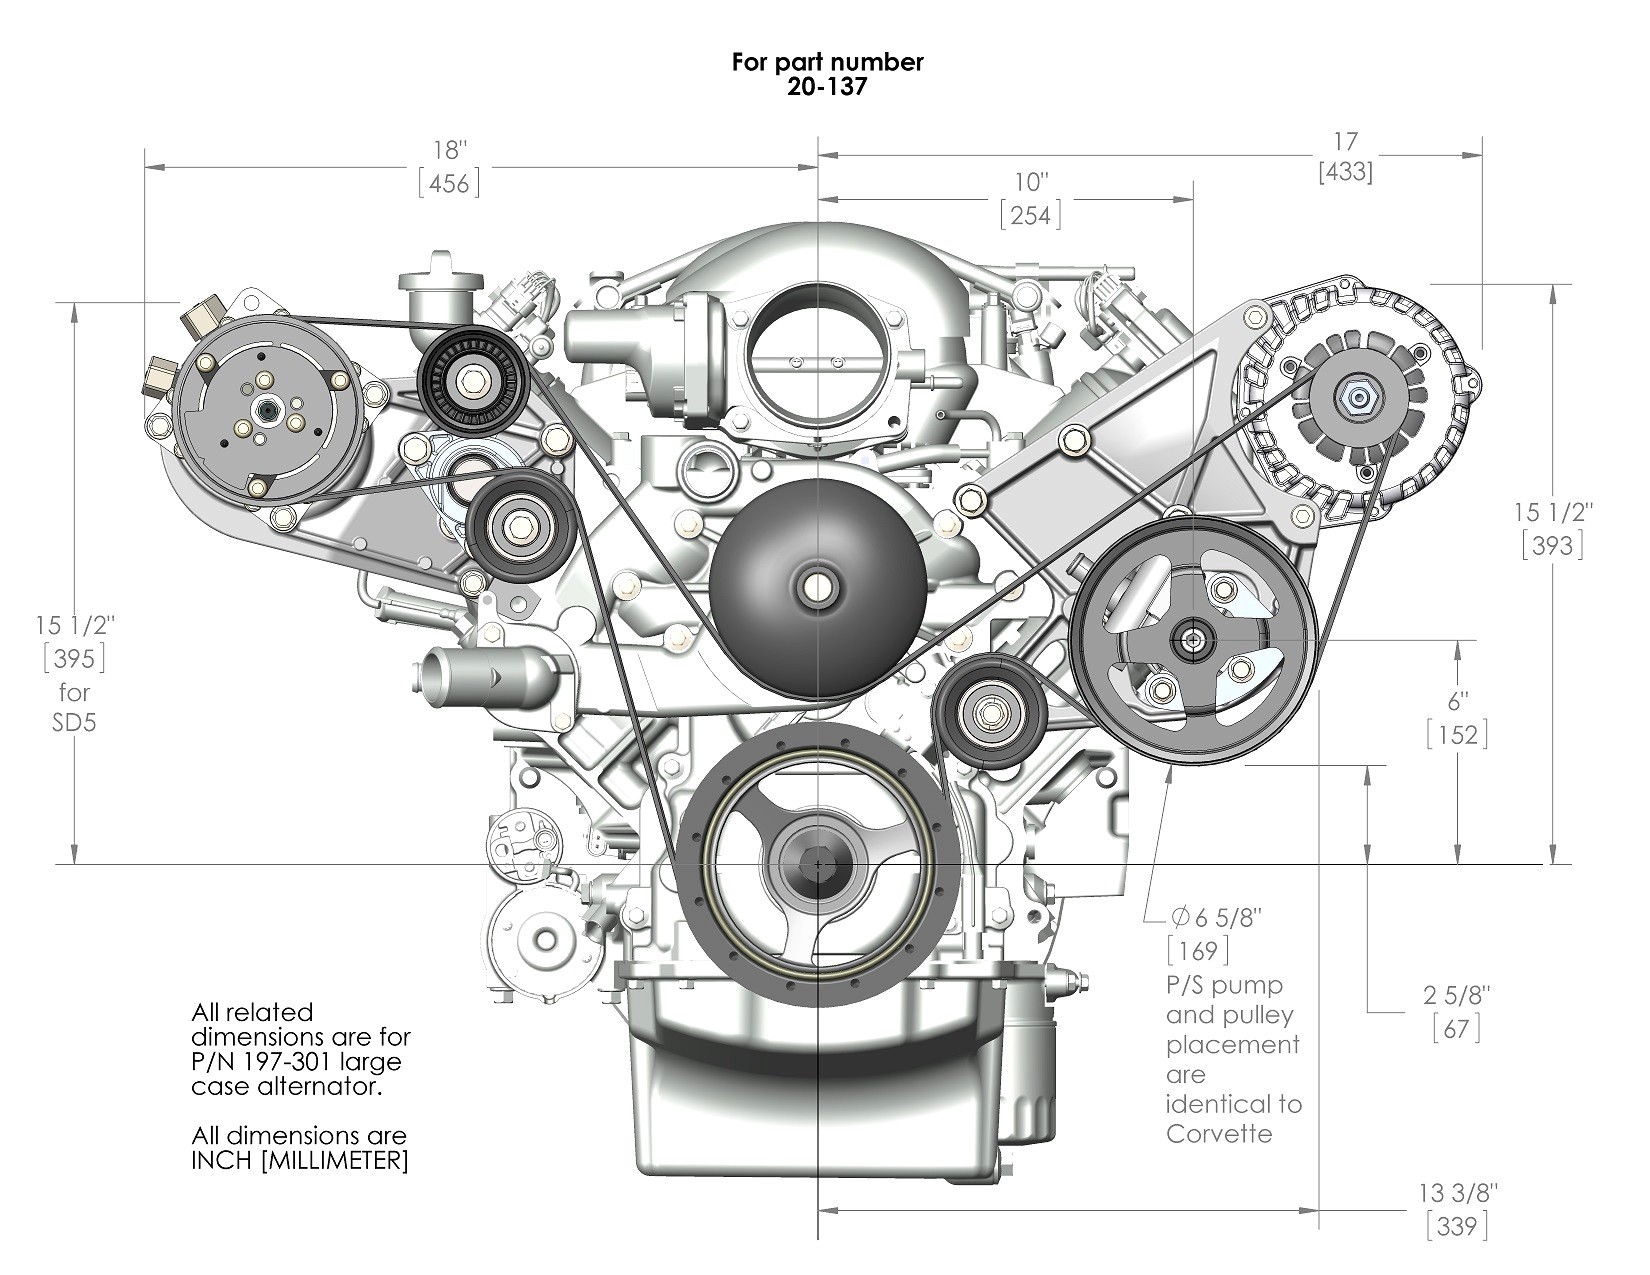 Turbo Parts Diagram 2018 Chevrolet Performance Parts Catalog Elegant Chevy Nova Parts Of Turbo Parts Diagram